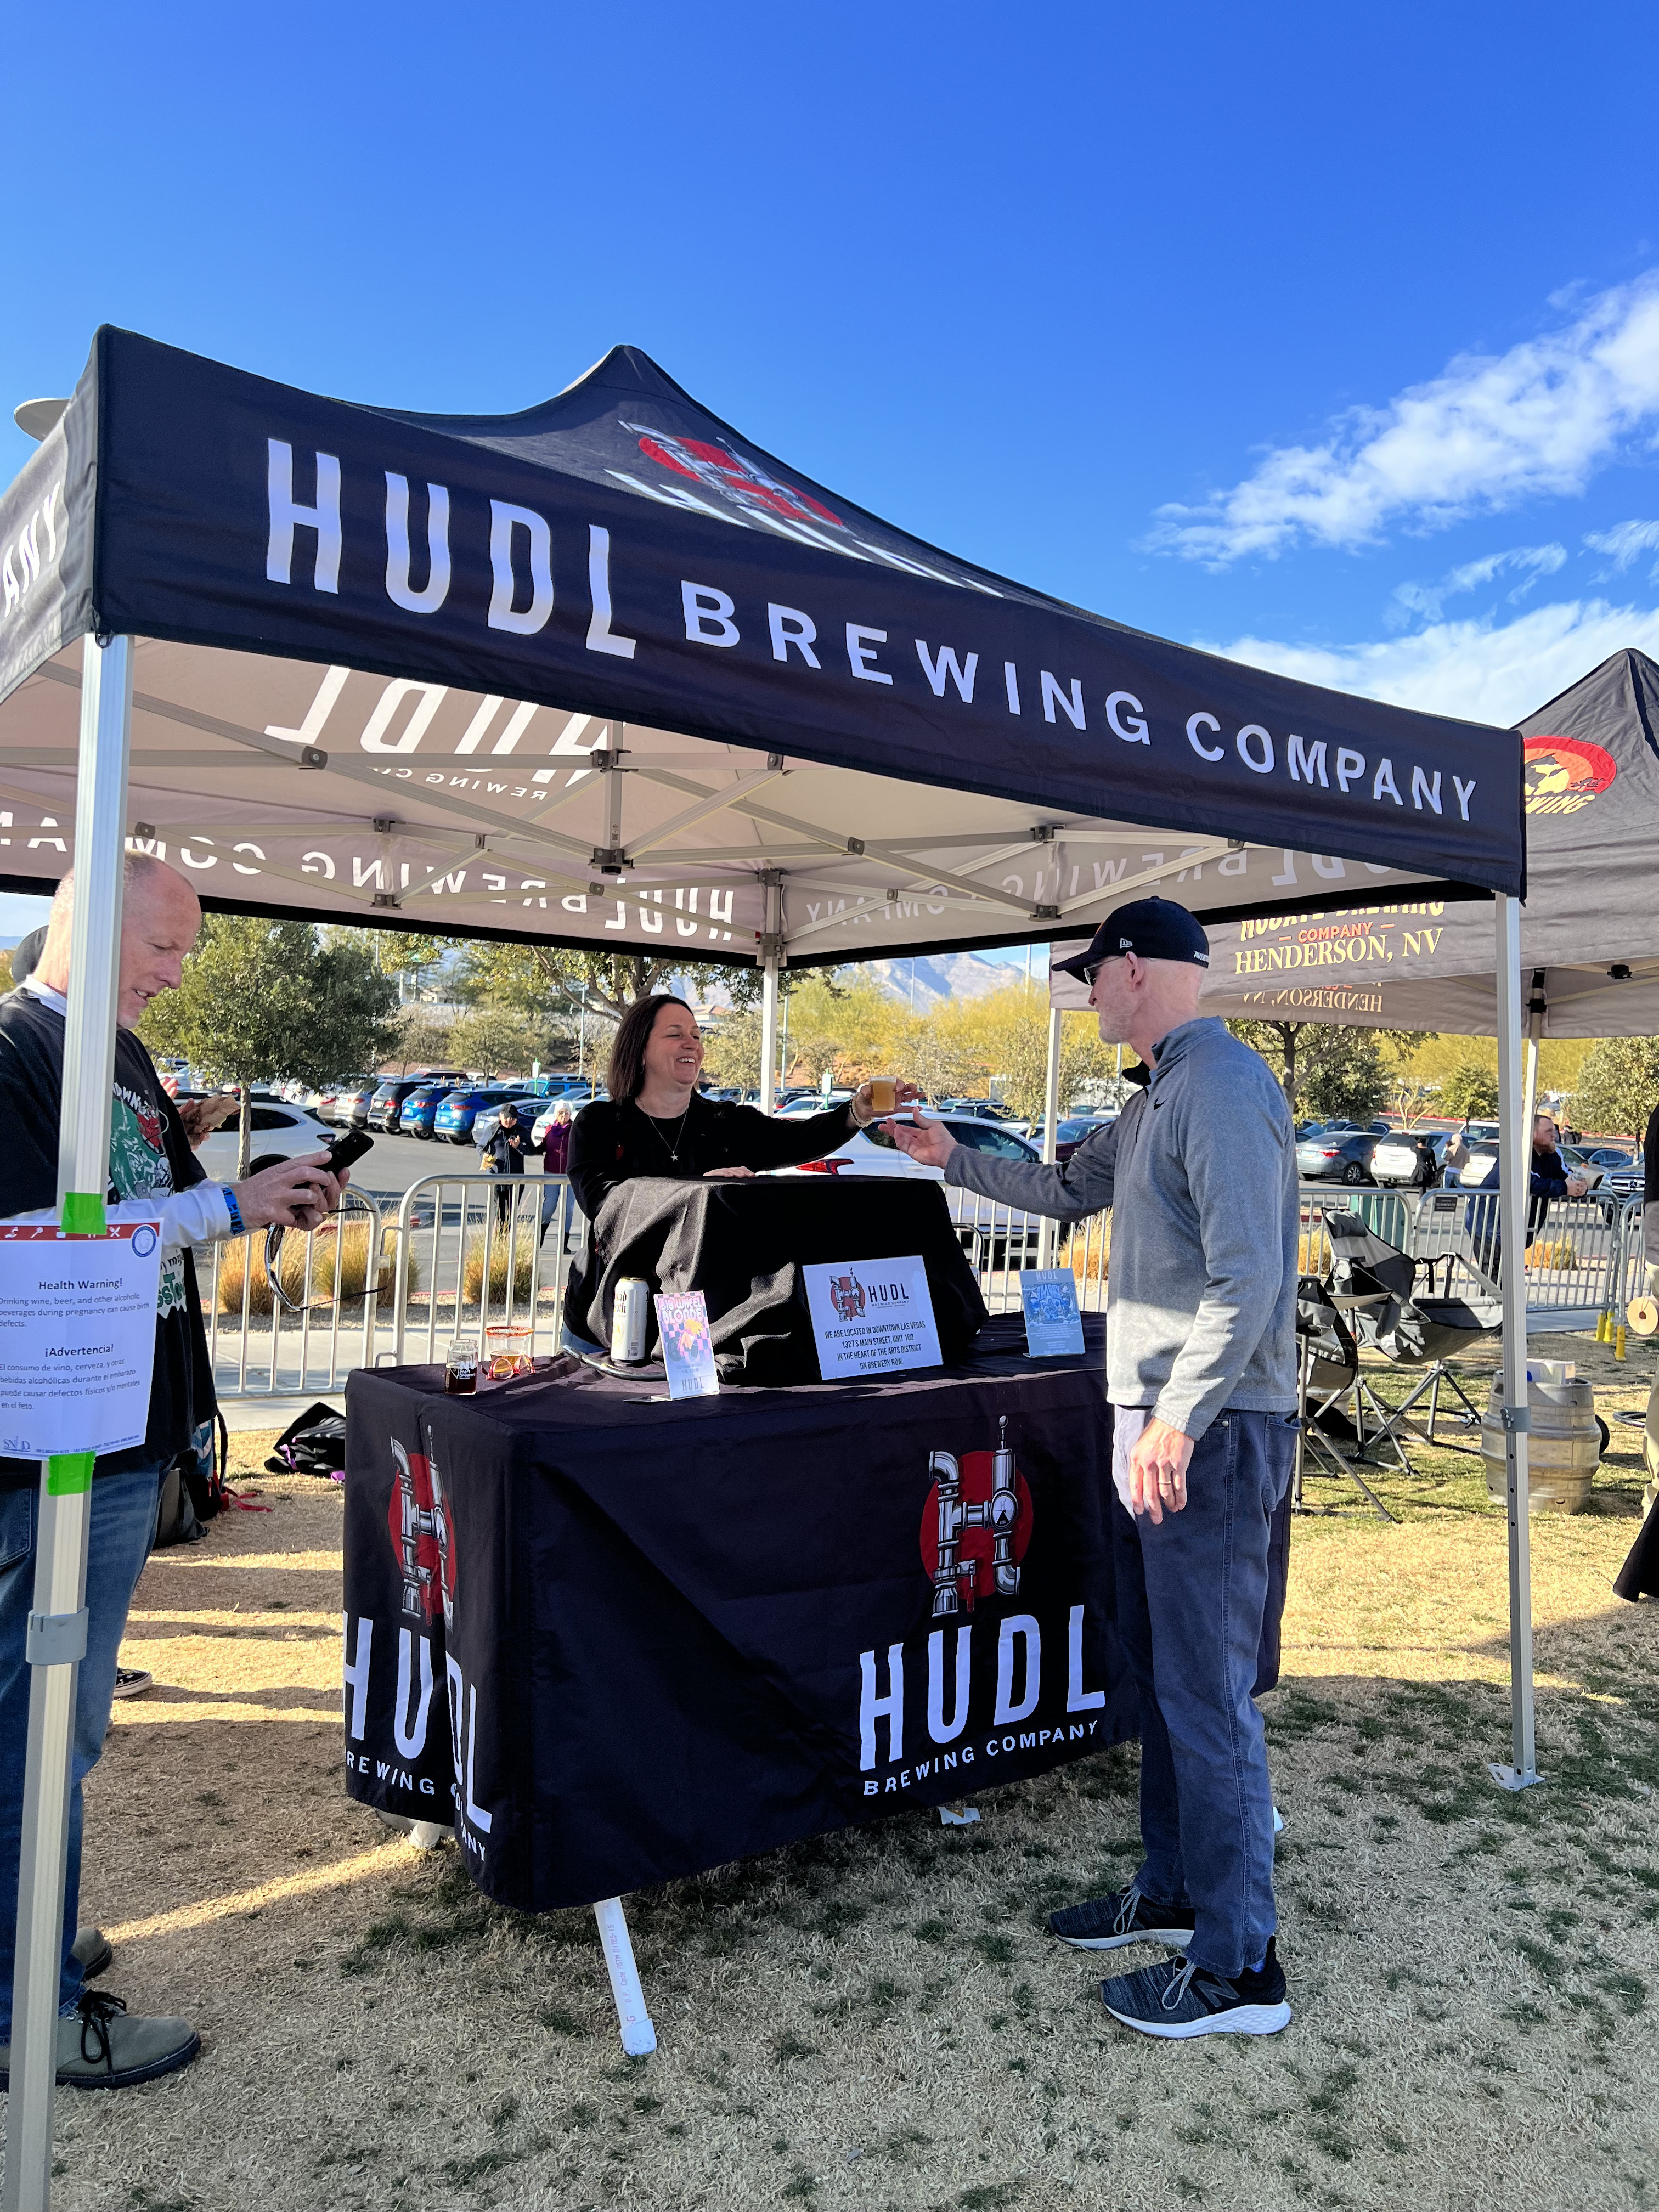 HUDL Brewing Company booth at Brew Festivus 2022